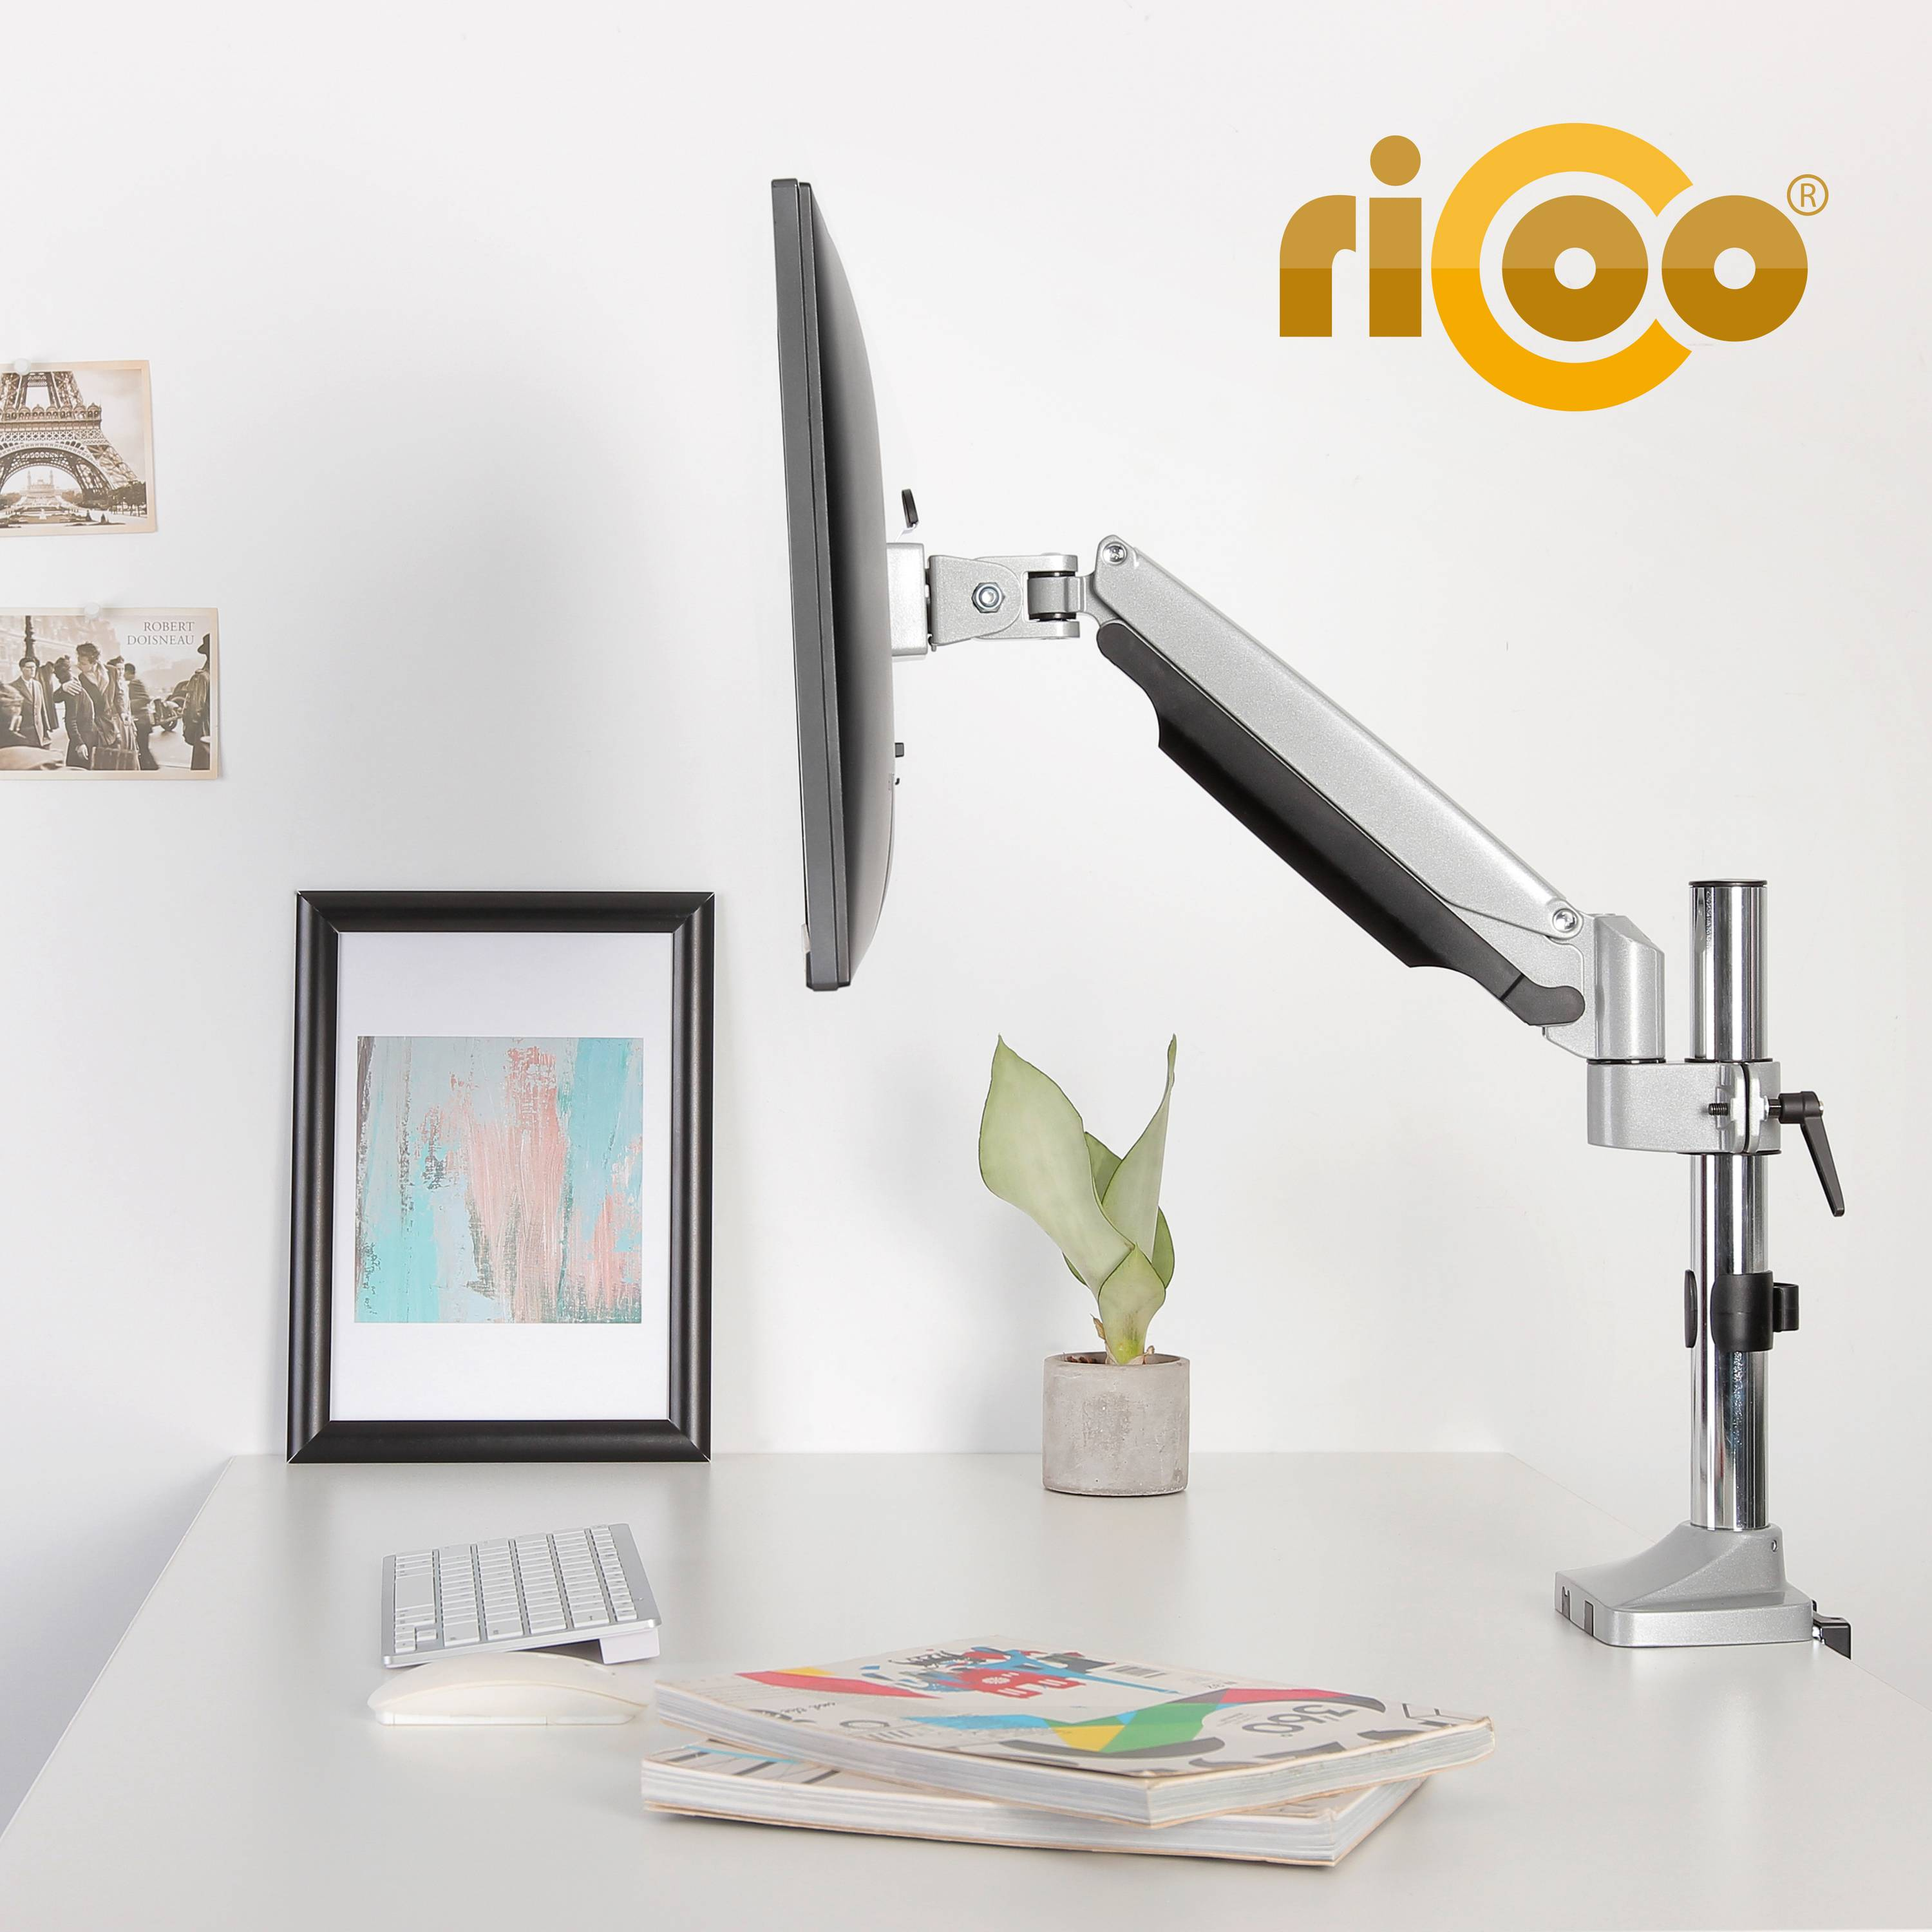 RICOO TS1011 Tischhalterung, Monitor silber